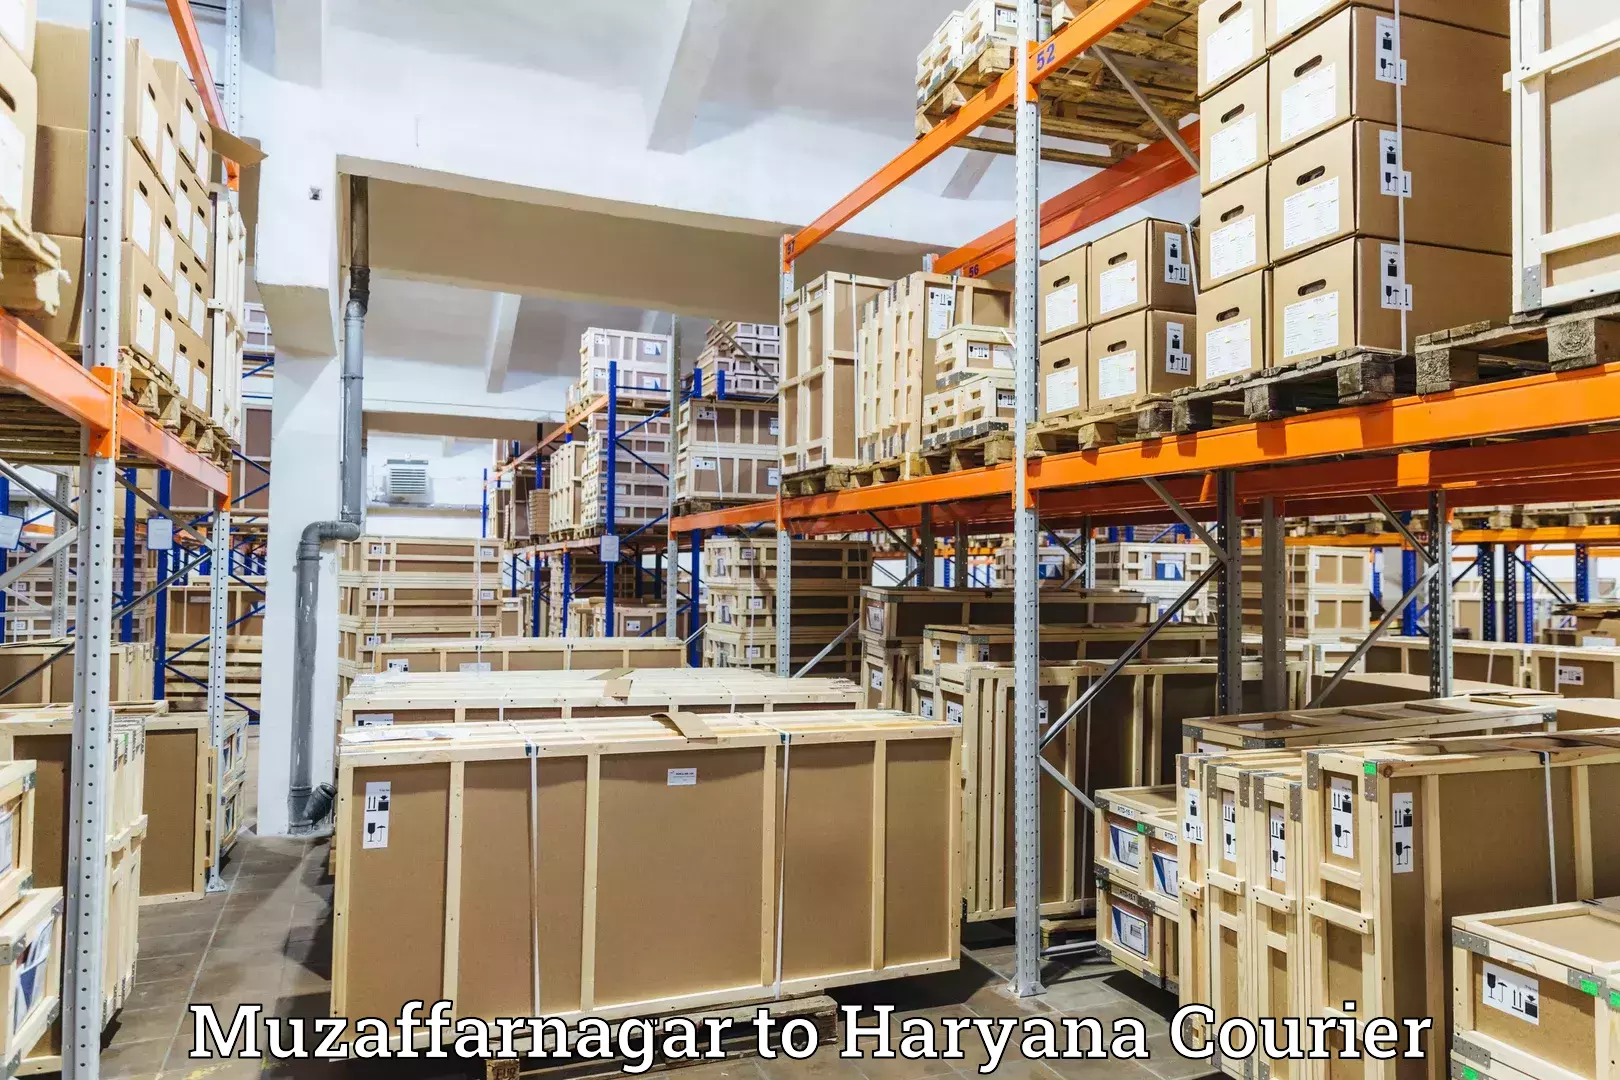 Global shipping networks in Muzaffarnagar to Gurgaon